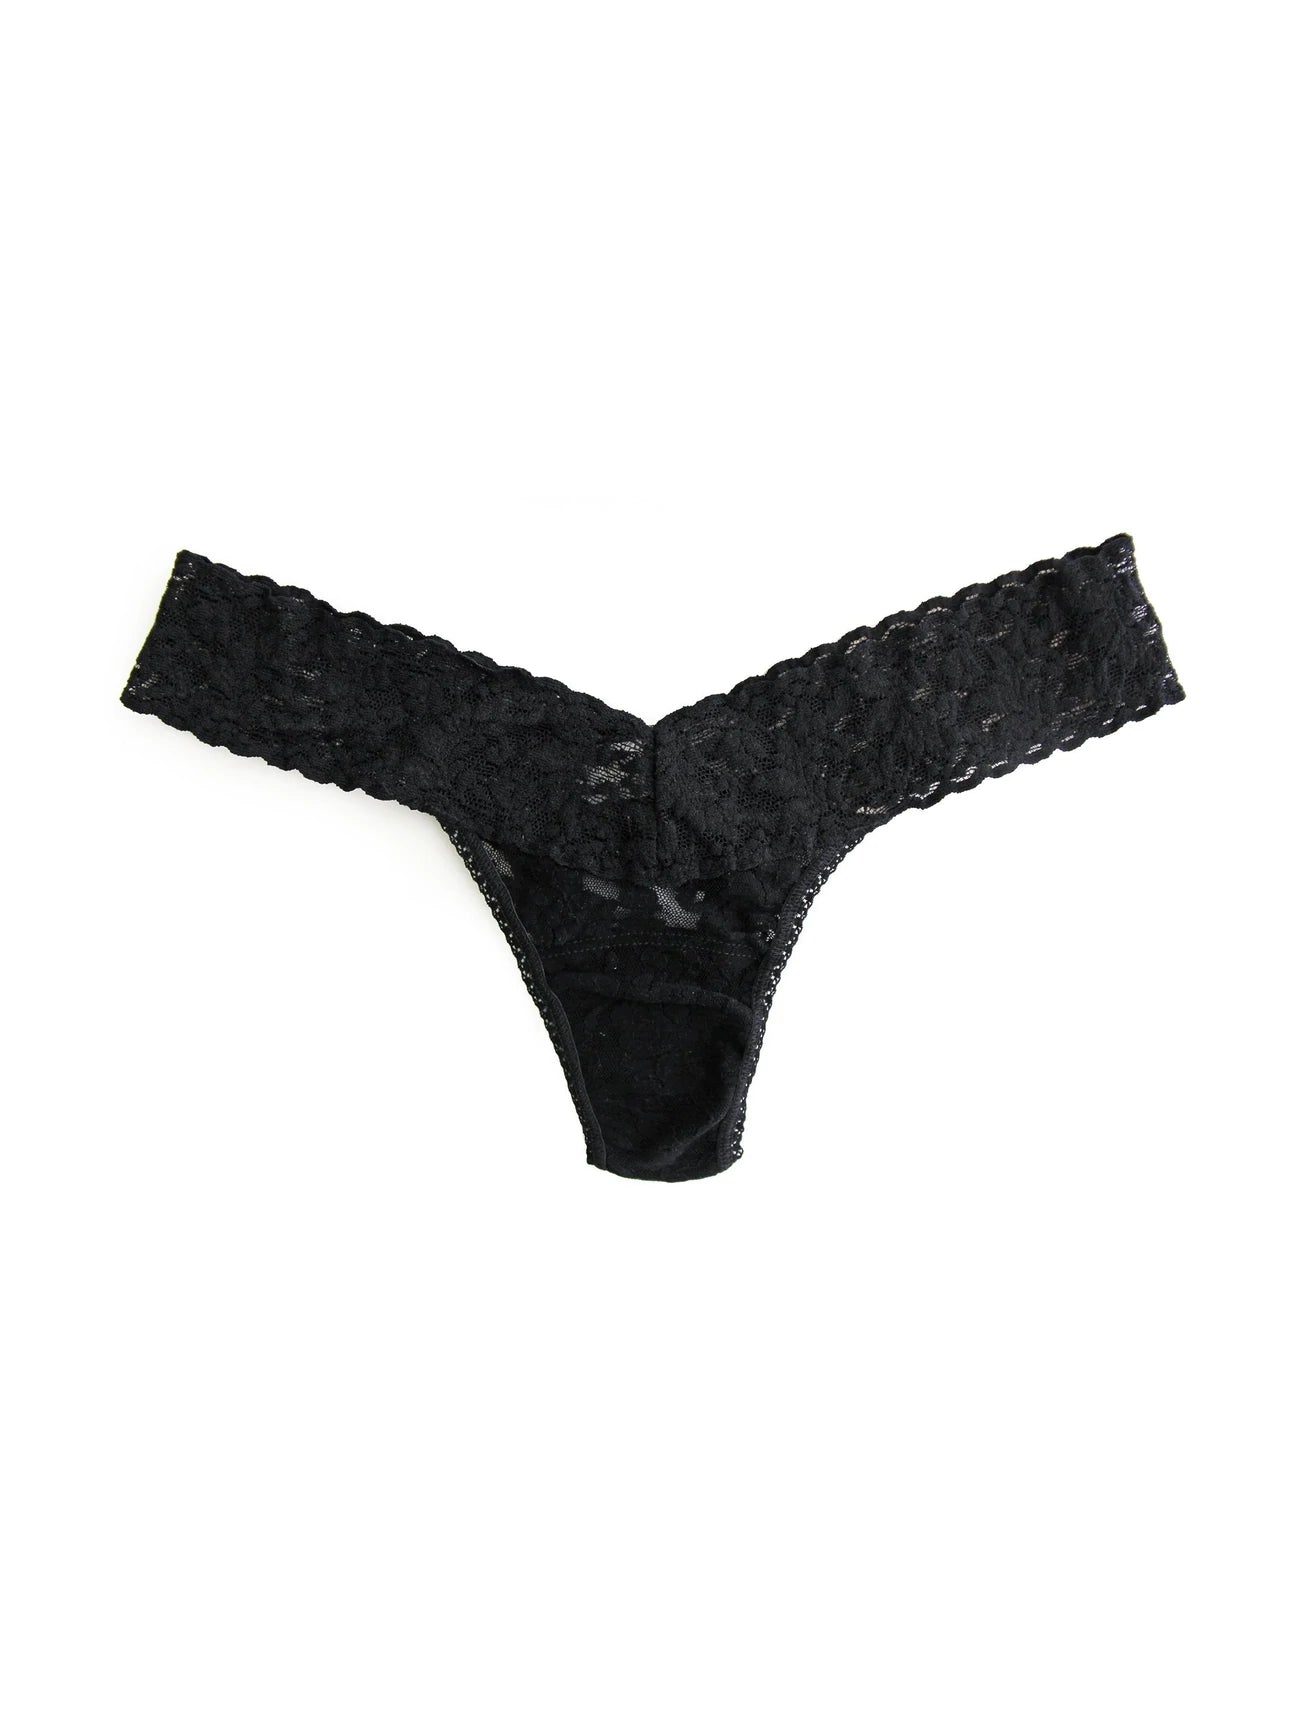 Low Rise Thong Underwear Hanky Panky Black  